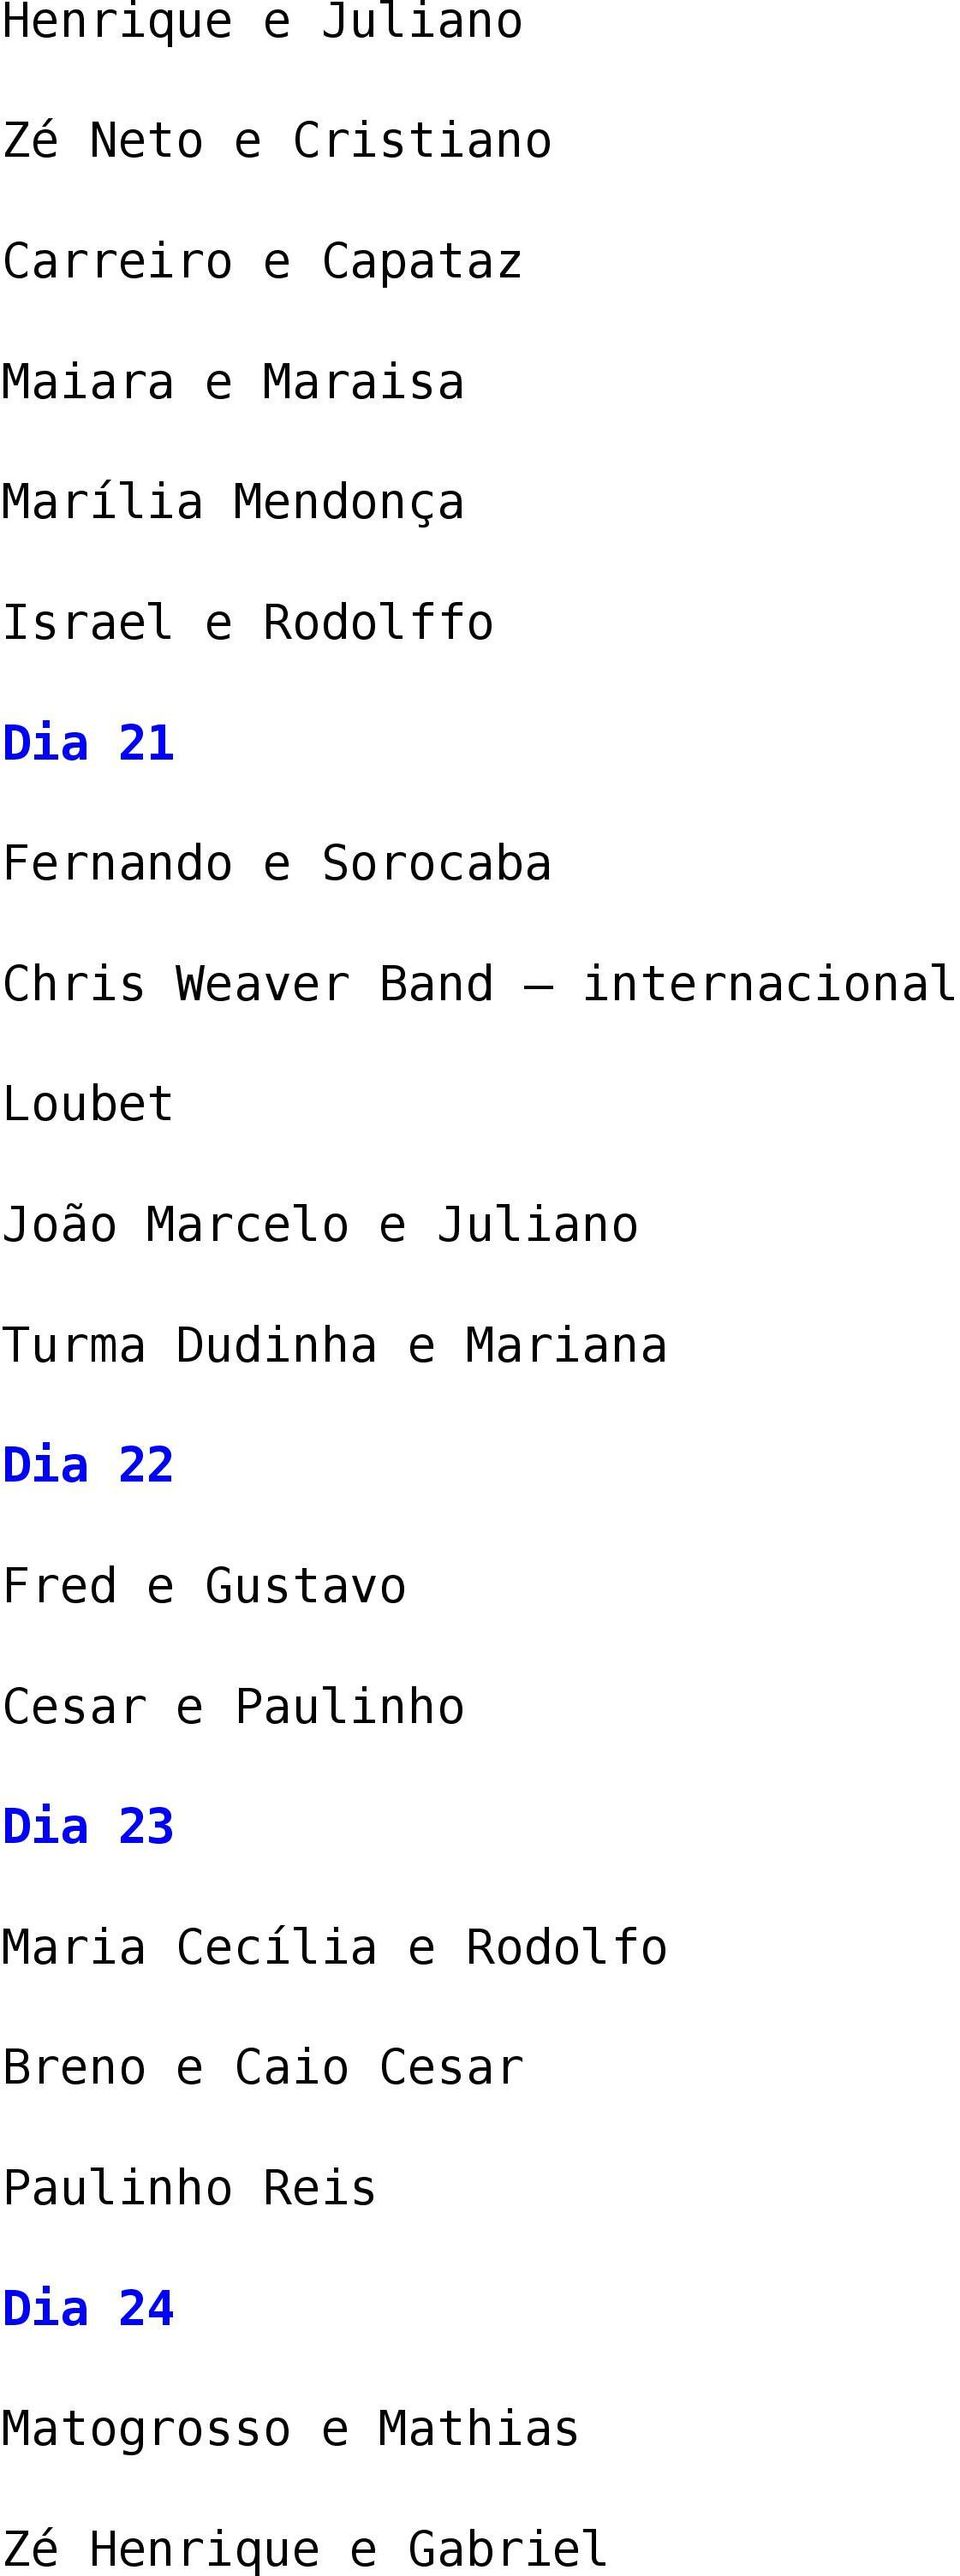 Marcelo e Juliano Turma Dudinha e Mariana Dia 22 Fred e Gustavo Cesar e Paulinho Dia 23 Maria